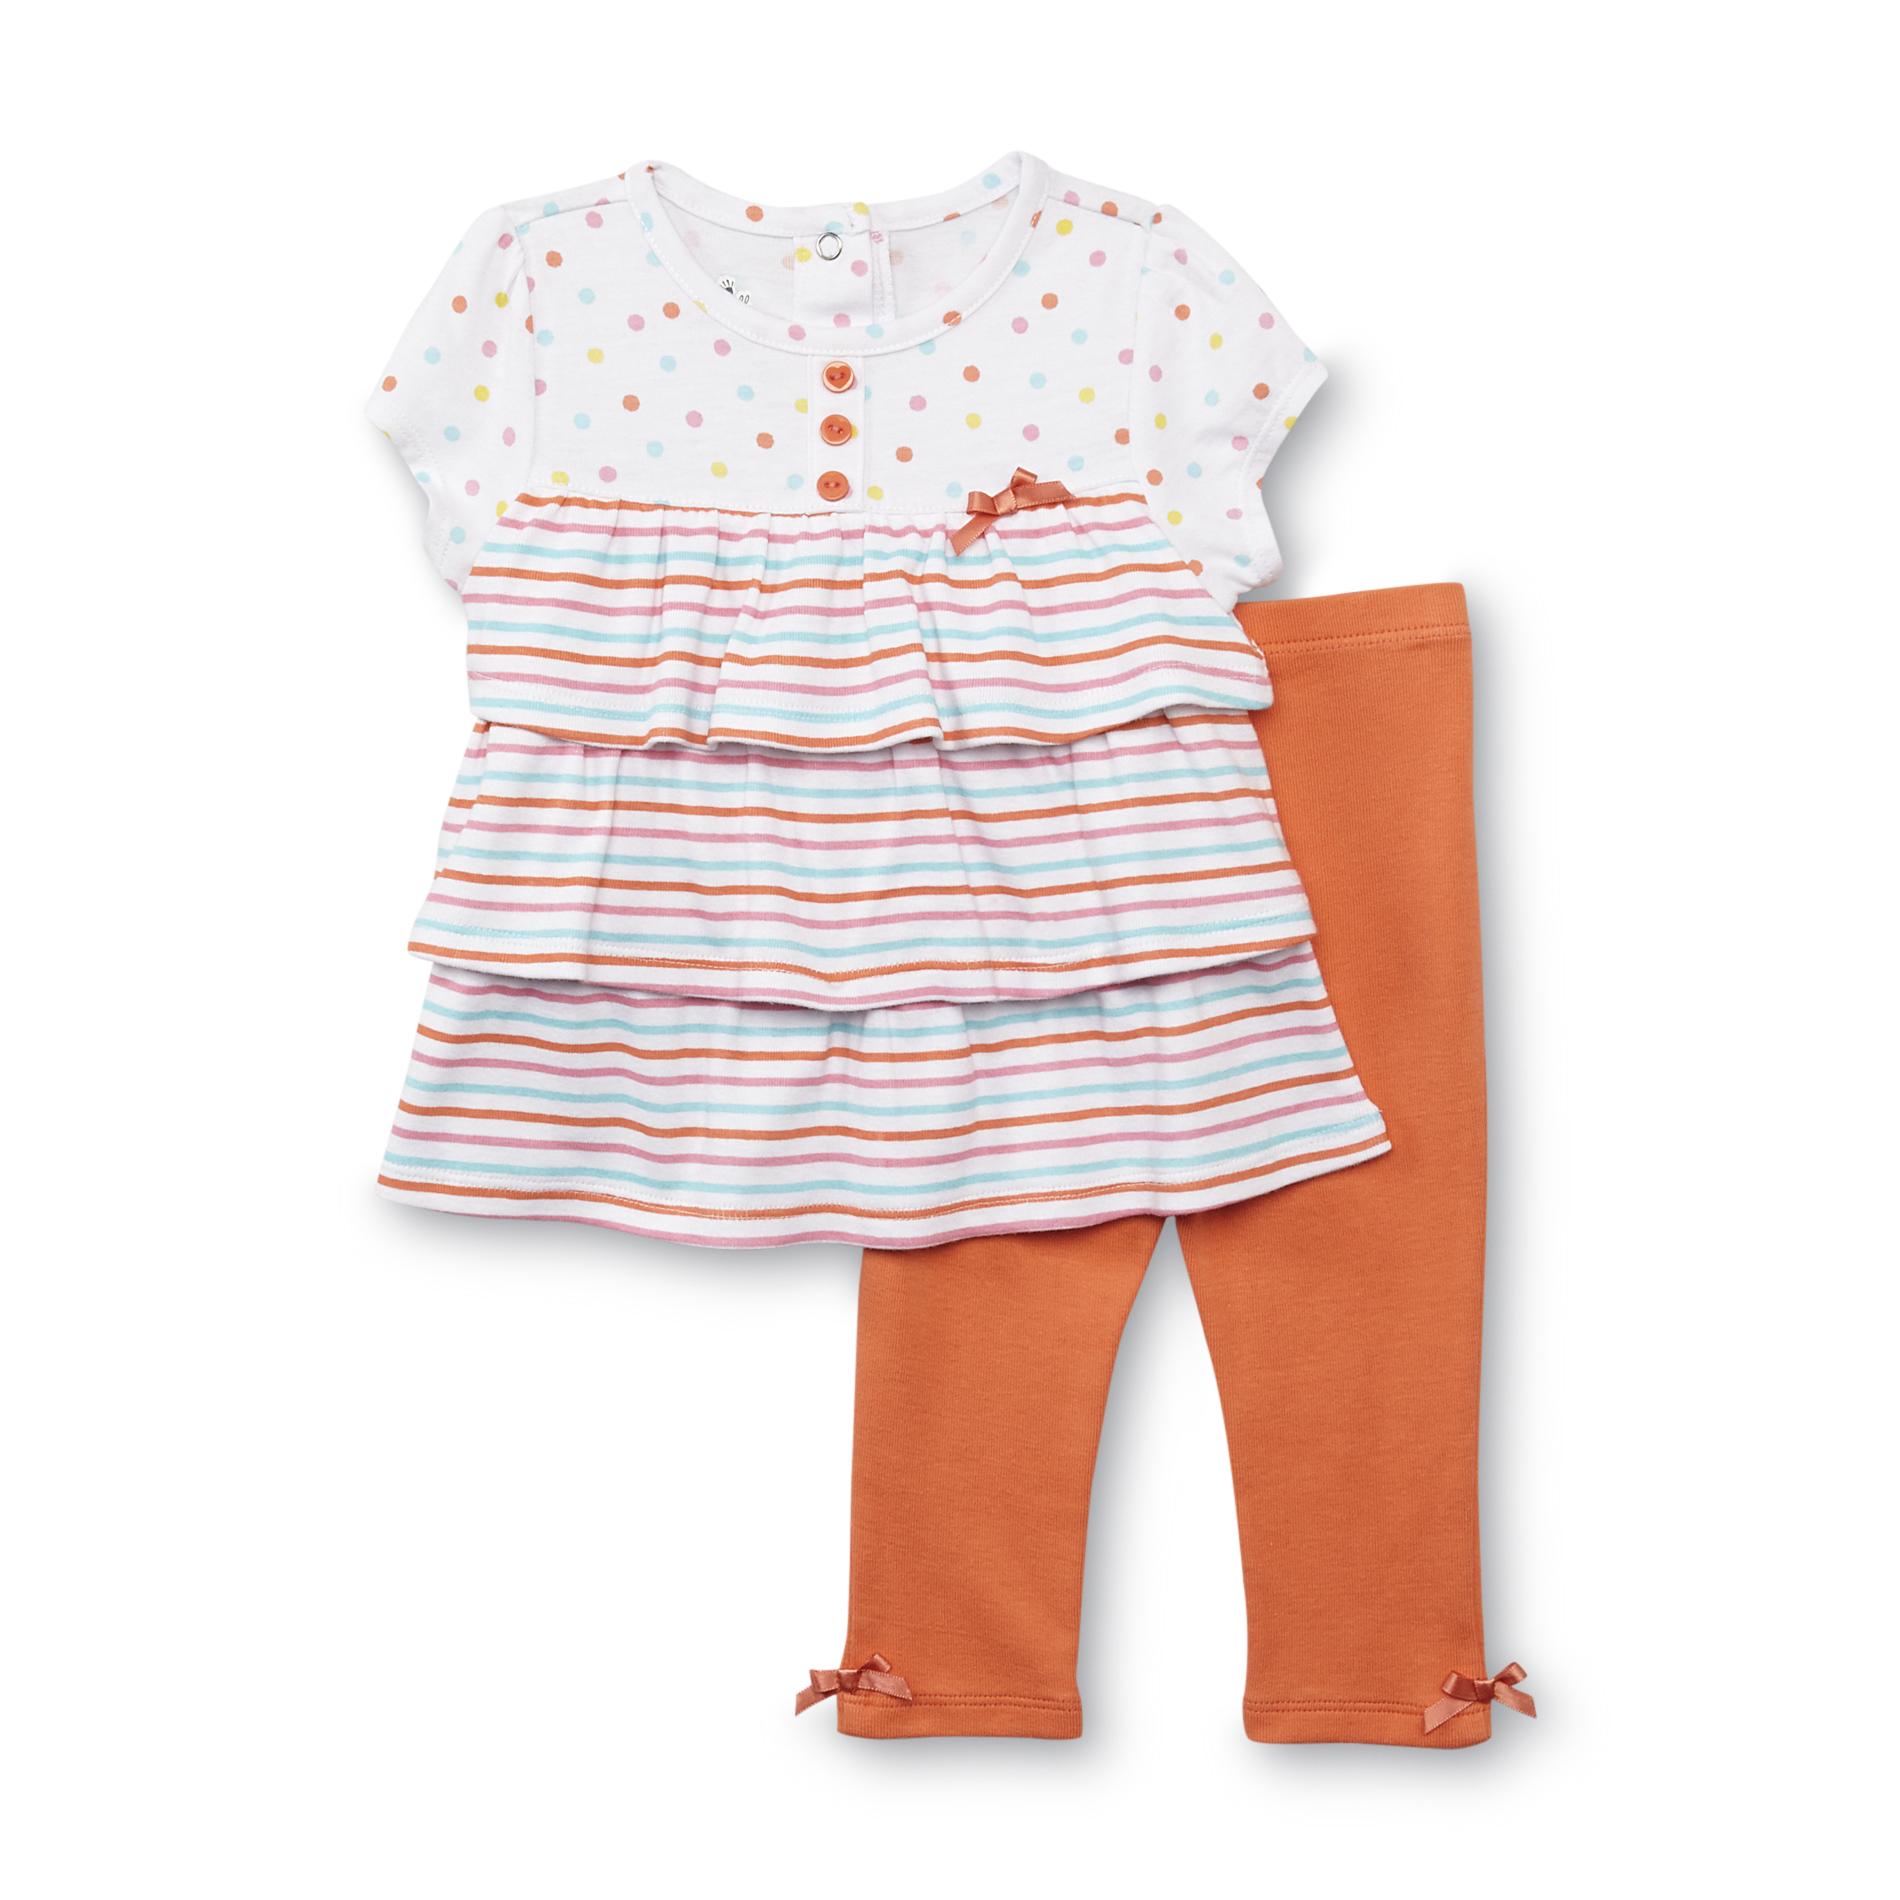 Small Wonders Newborn Girl's Top & Leggings - Polka Dots & Striped